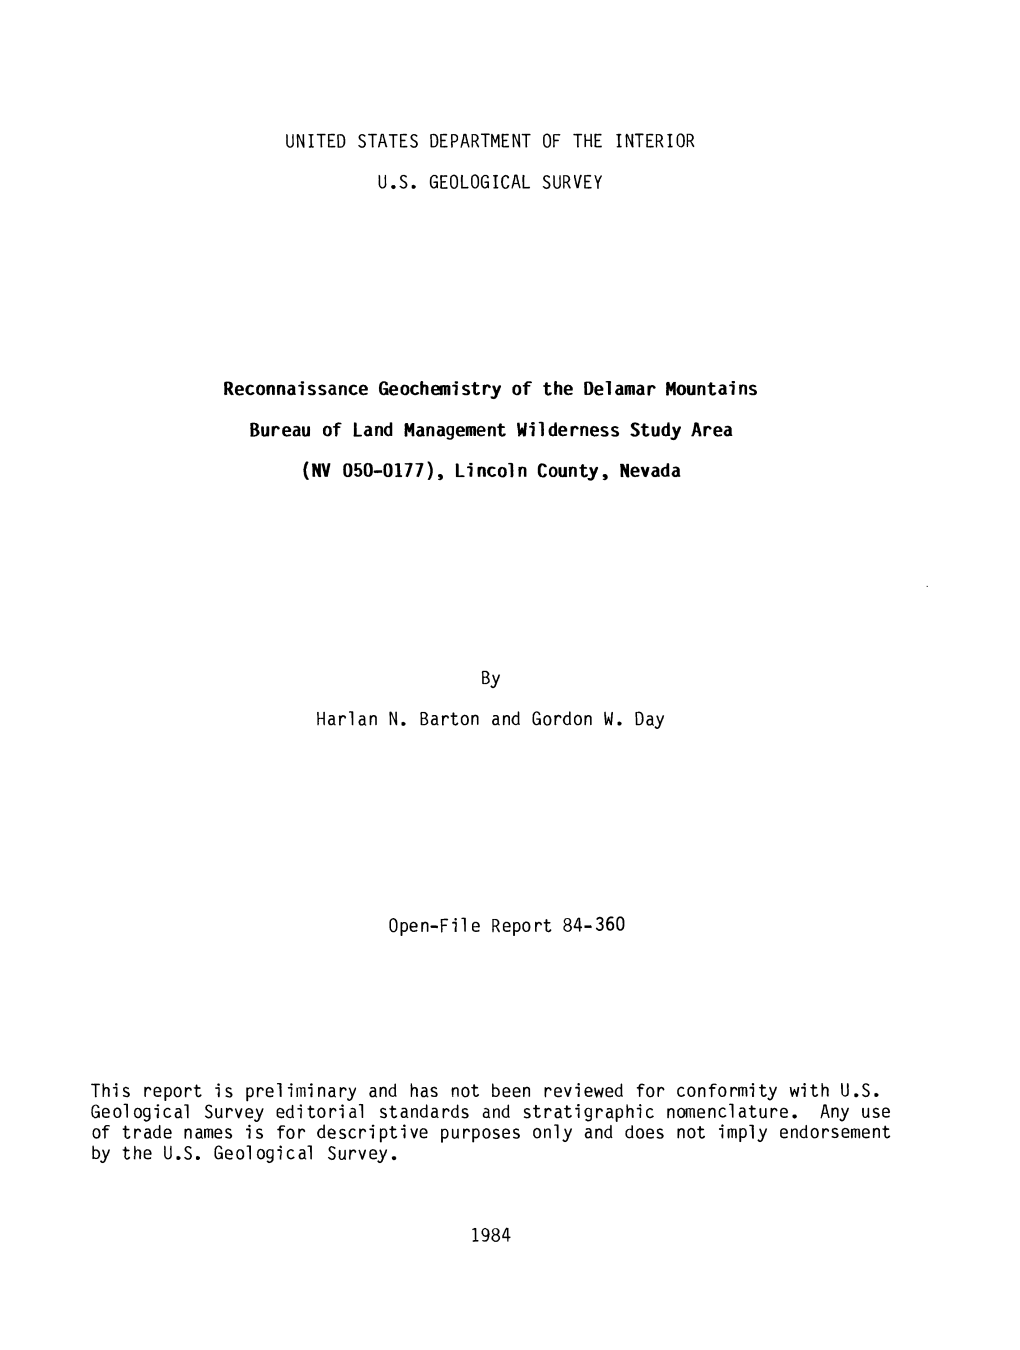 Reconnaissance Geochemistry of the Delamar Mountains Bureau of Land